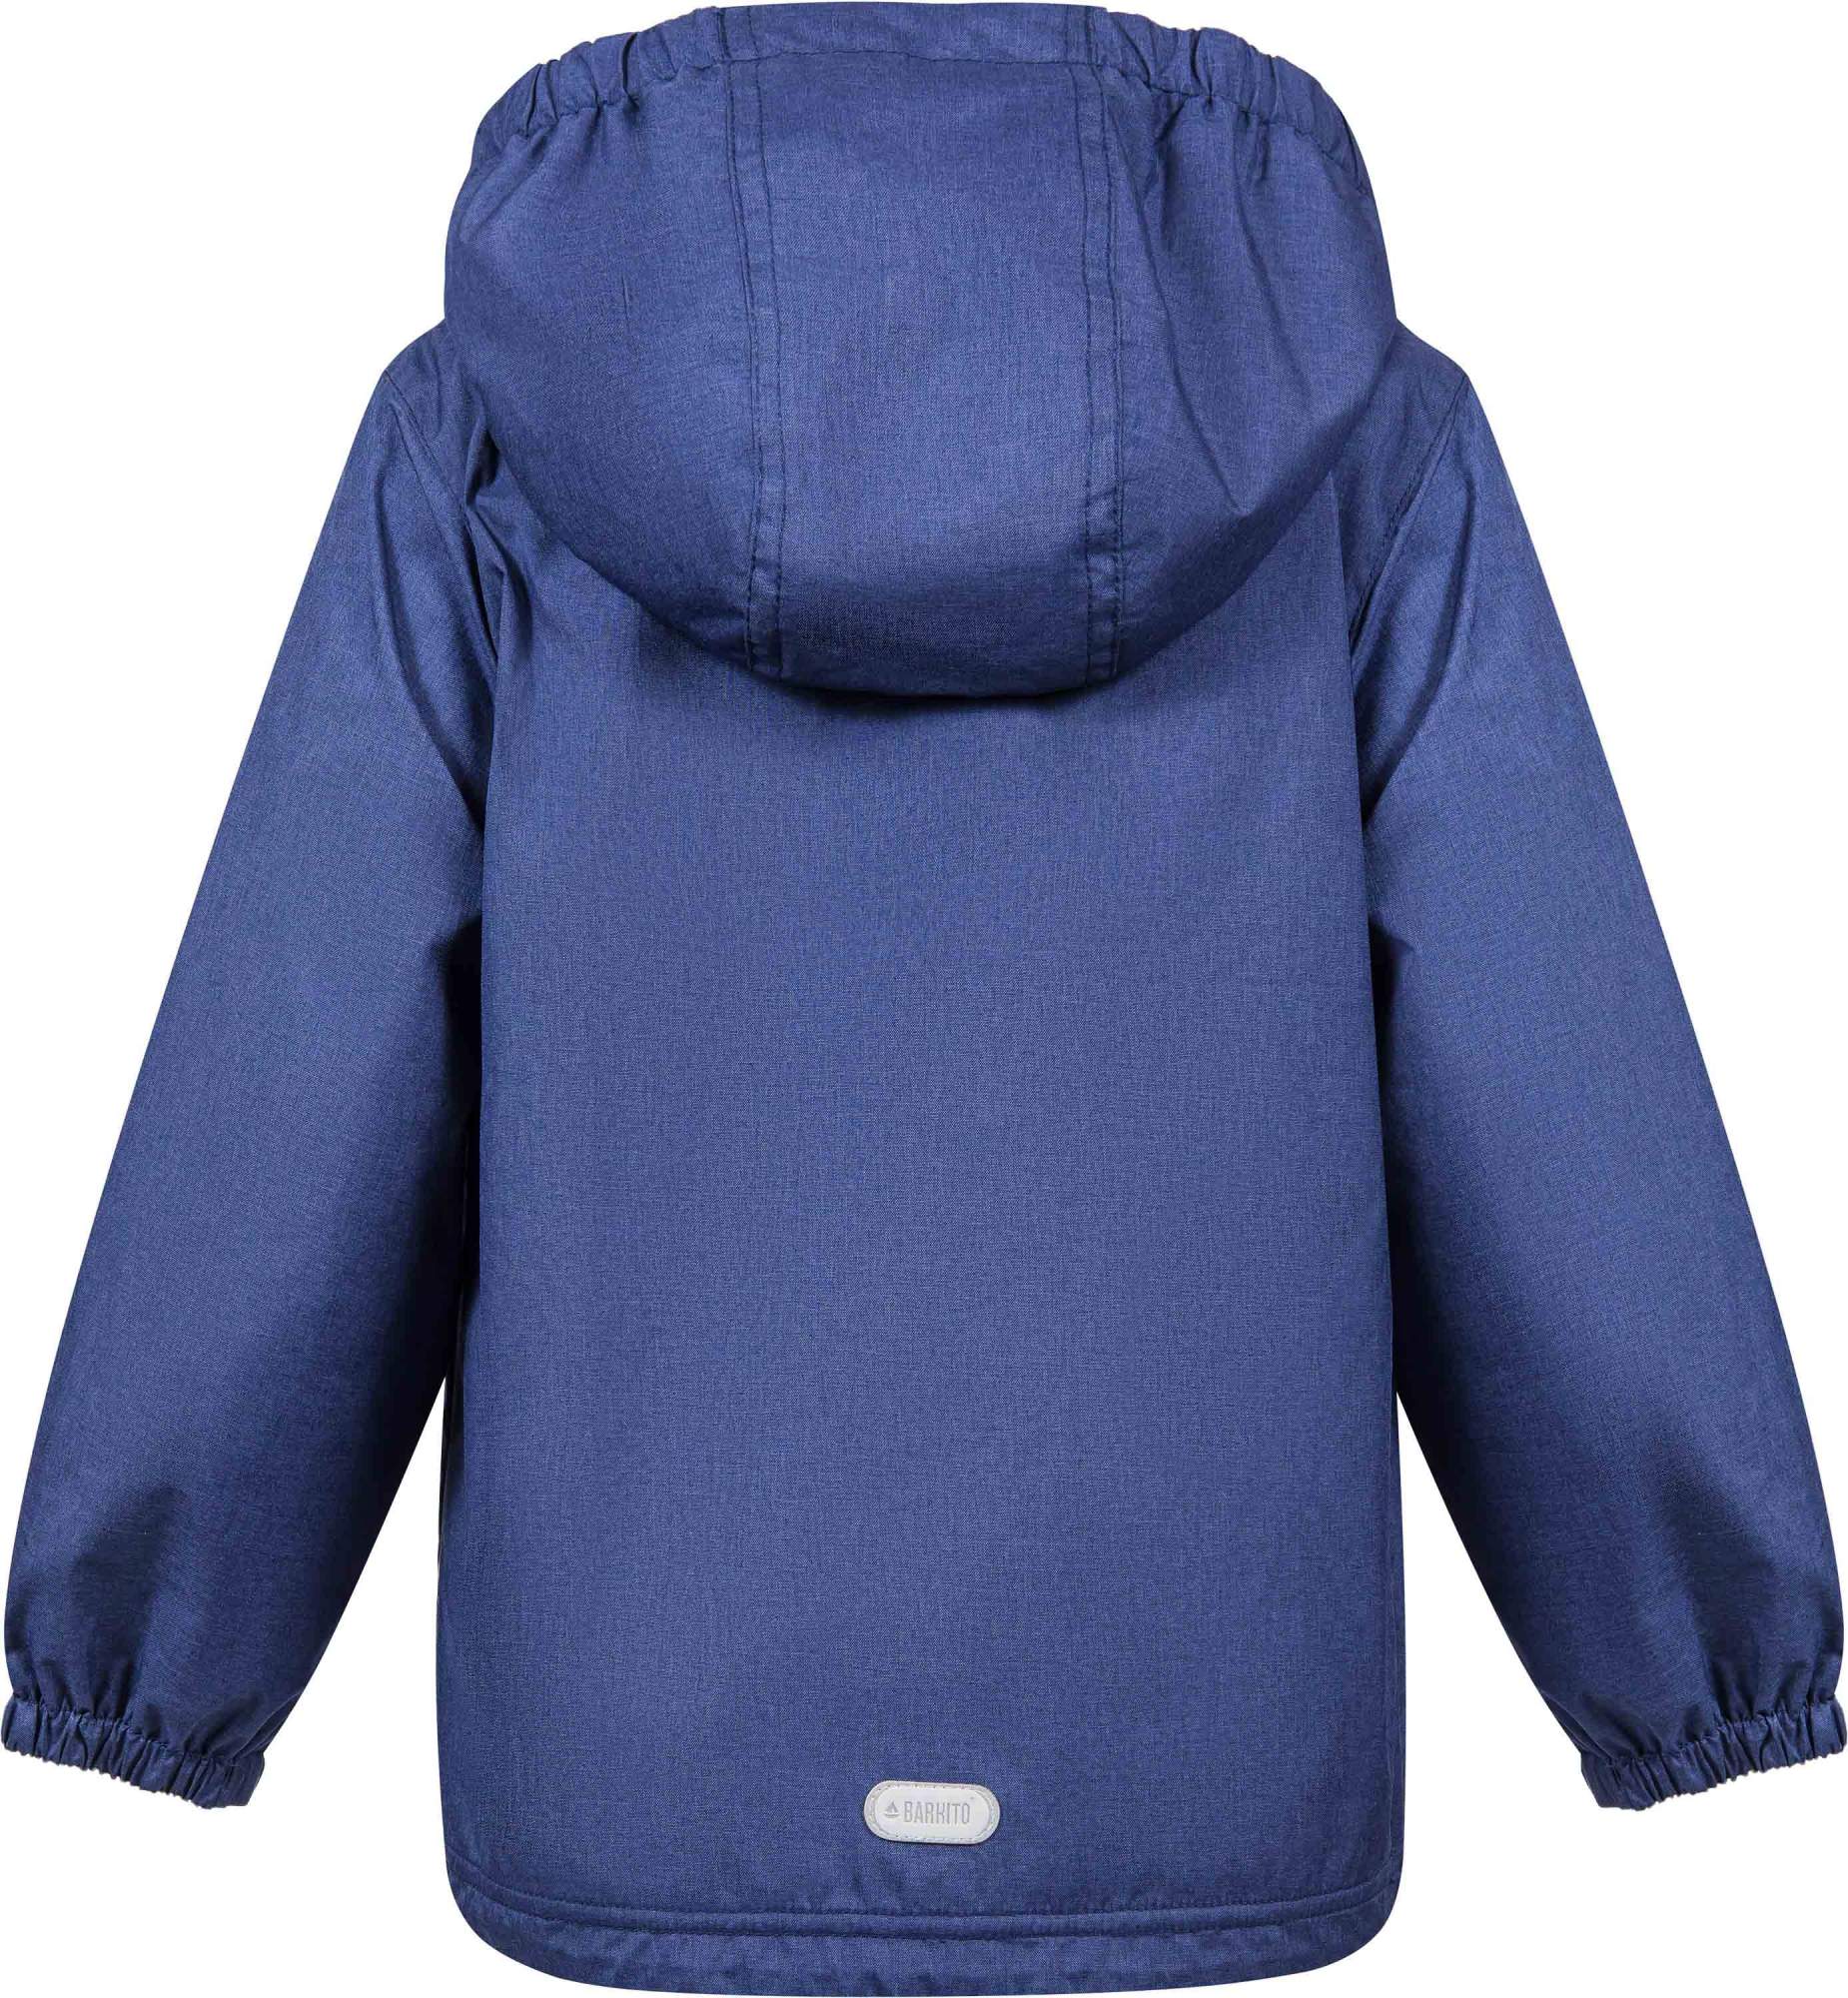 Куртка Futurino cool тёмно-синяя для мальчиков